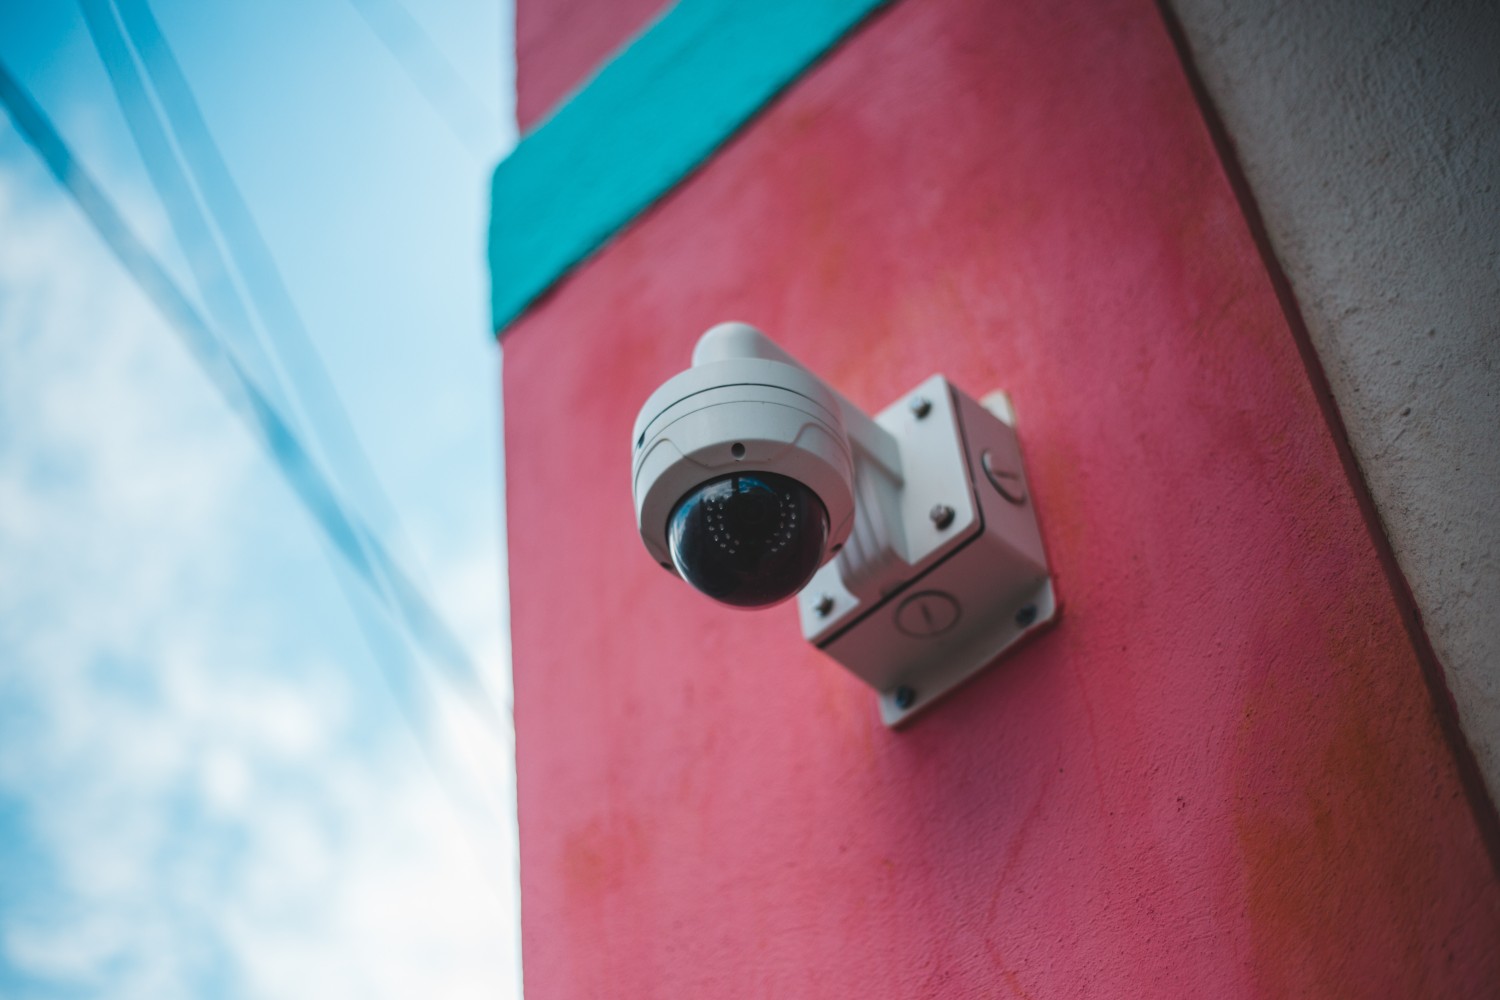 a close up shot of a security camera